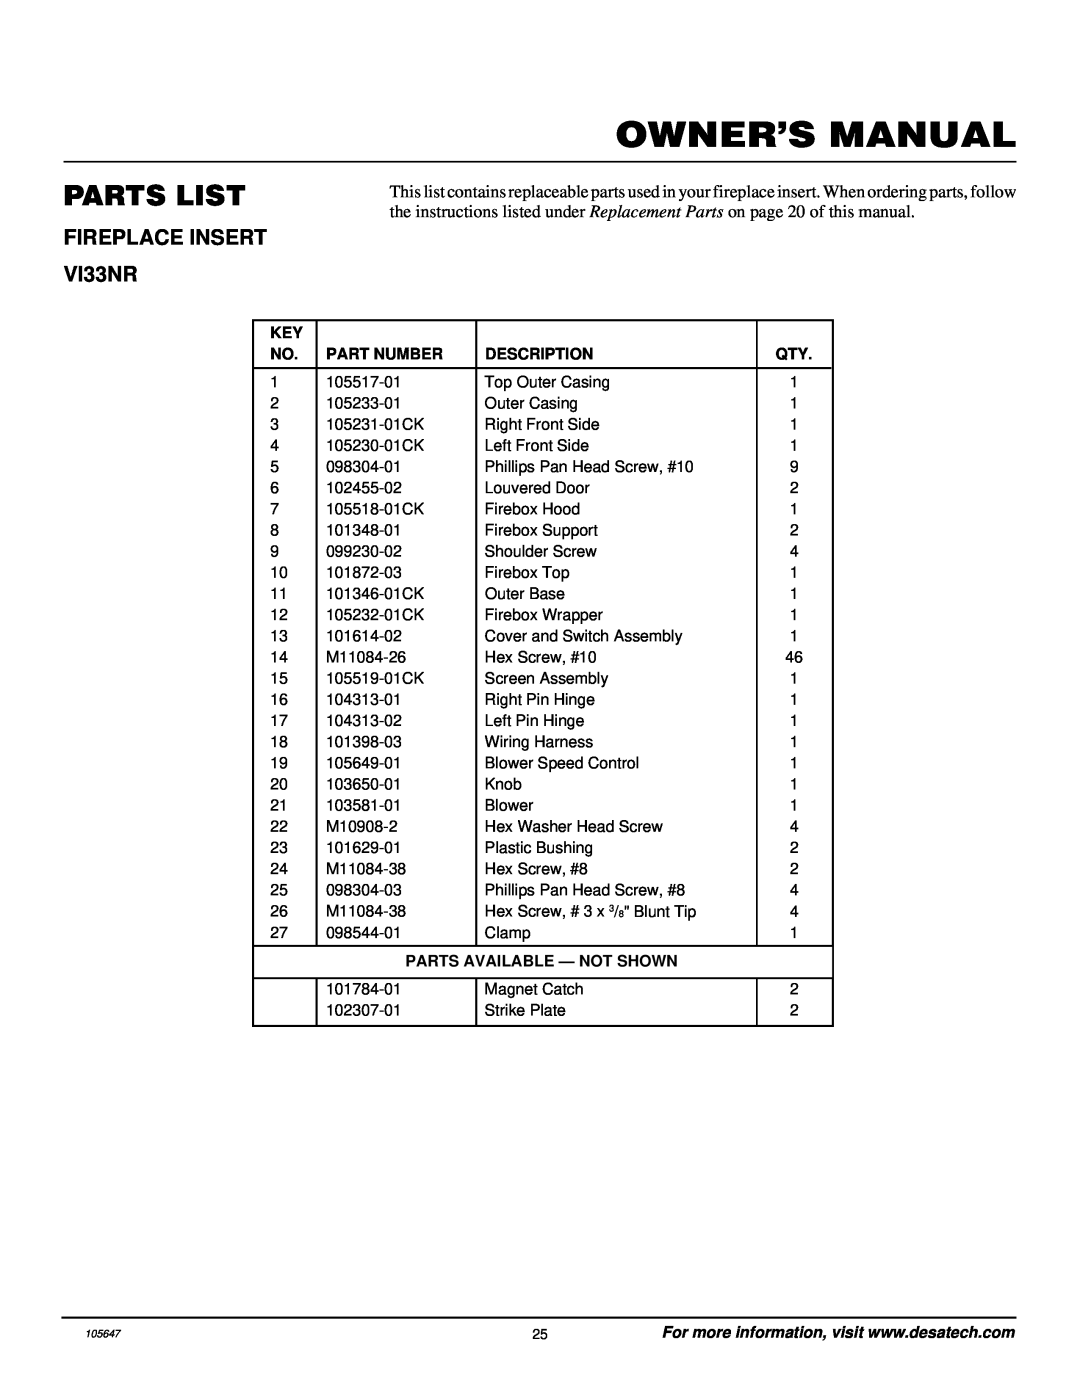 Desa installation manual Owner’S Manual, Parts List, FIREPLACE INSERT VI33NR 